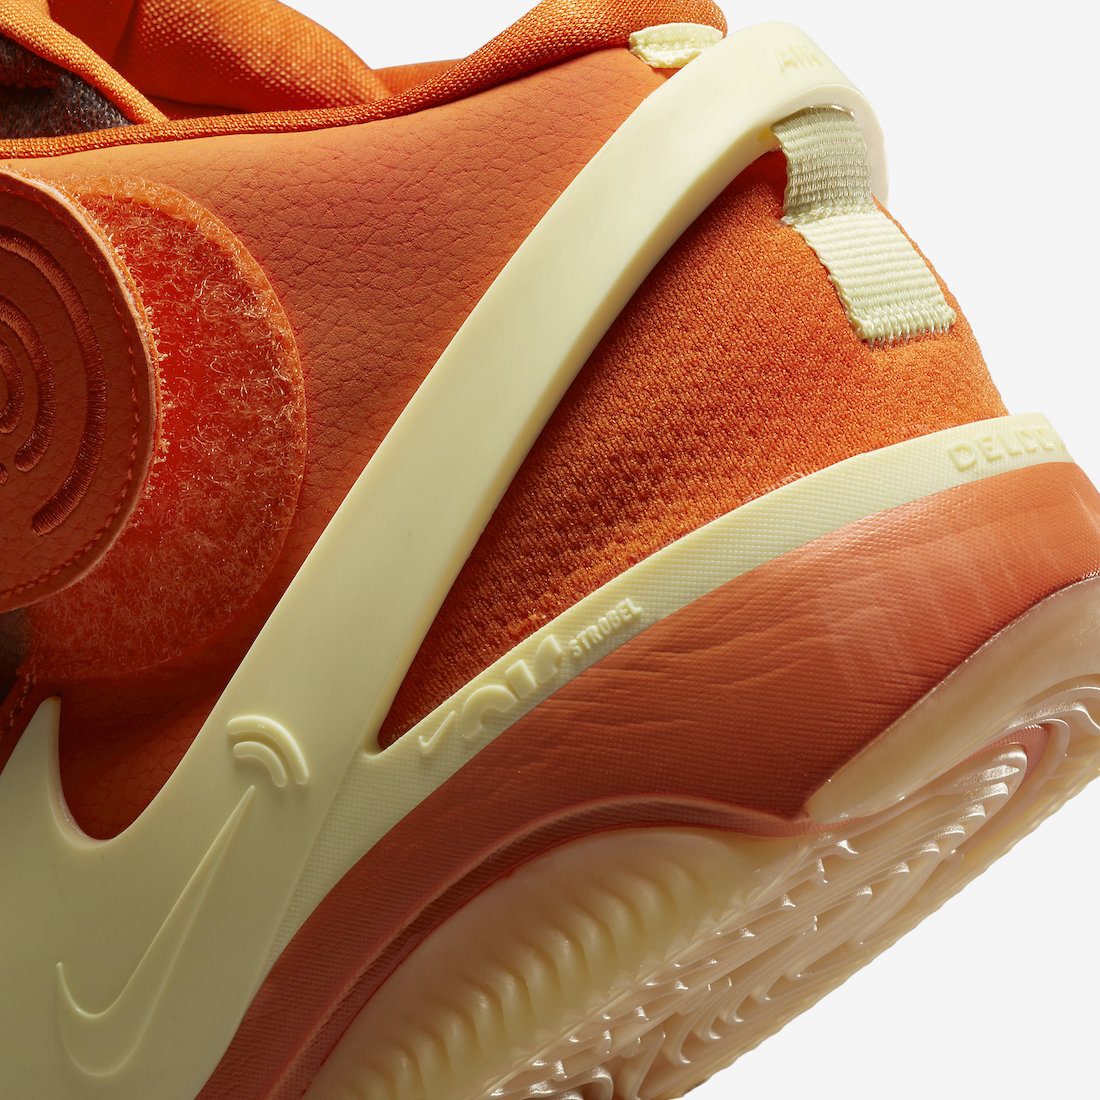 Nike Air Deldon Safety Orange Citron is Tint DM4096-800 Release Date Info